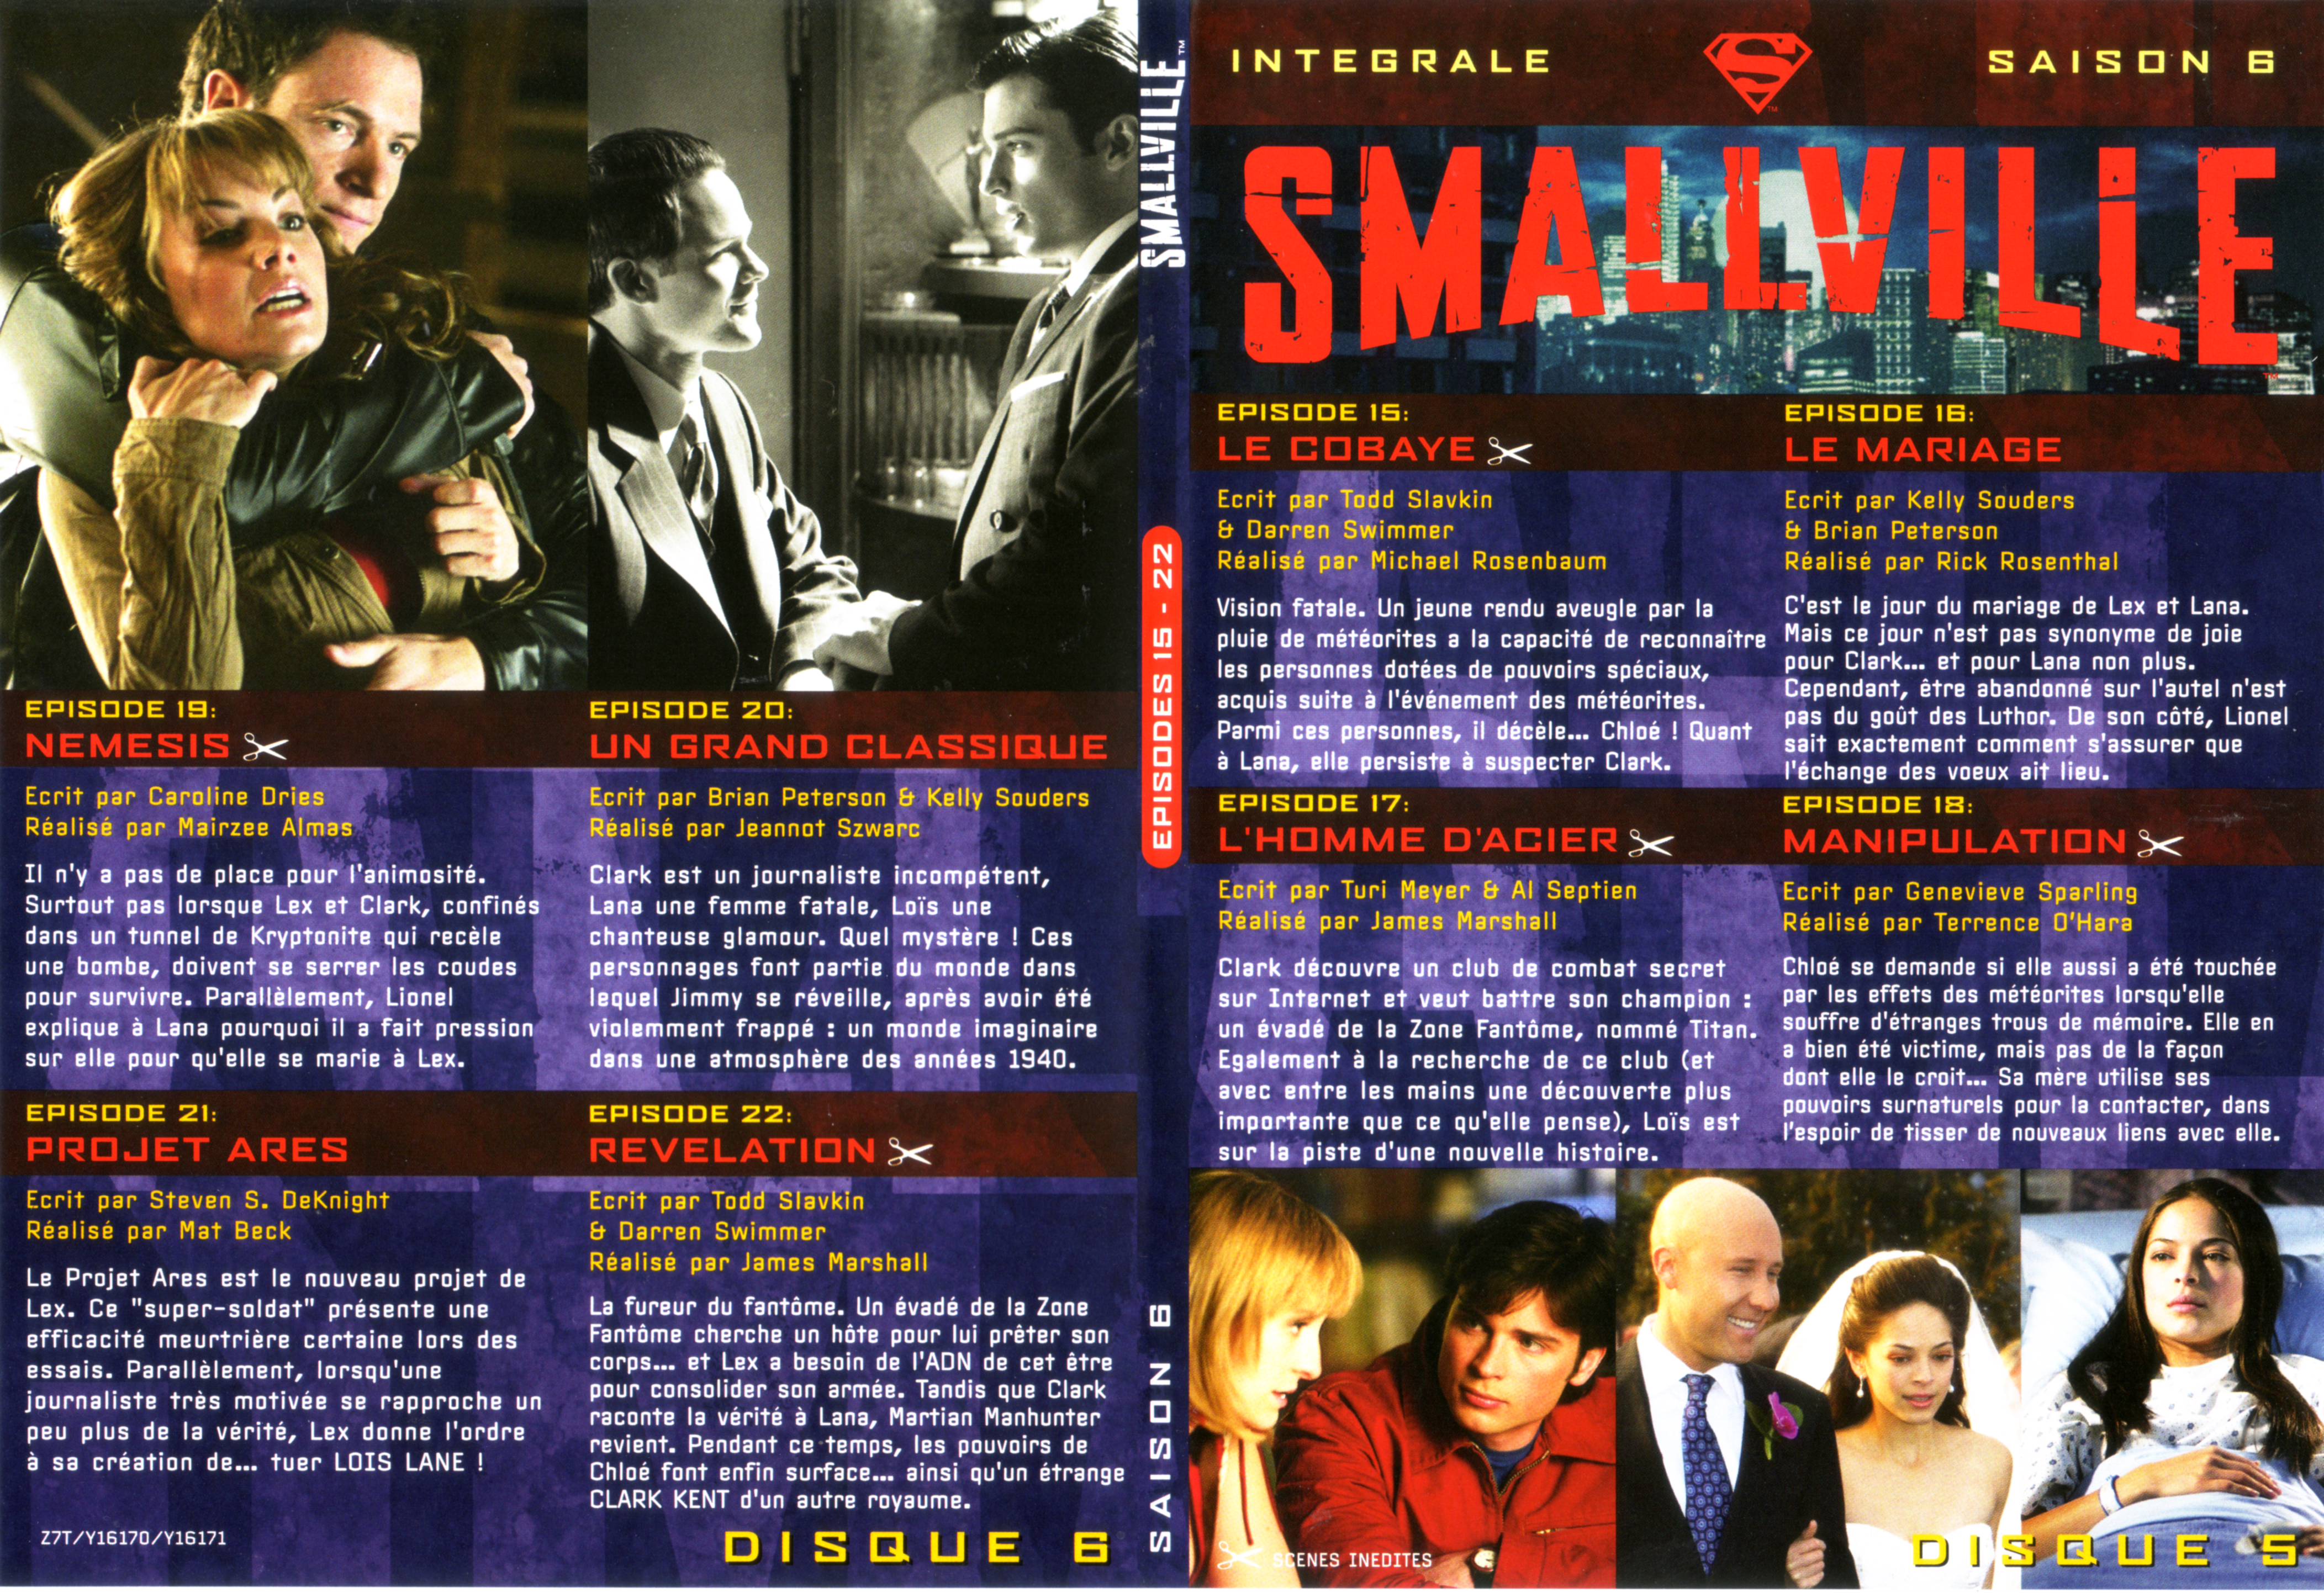 Jaquette DVD Smallville saison 6 DVD 3